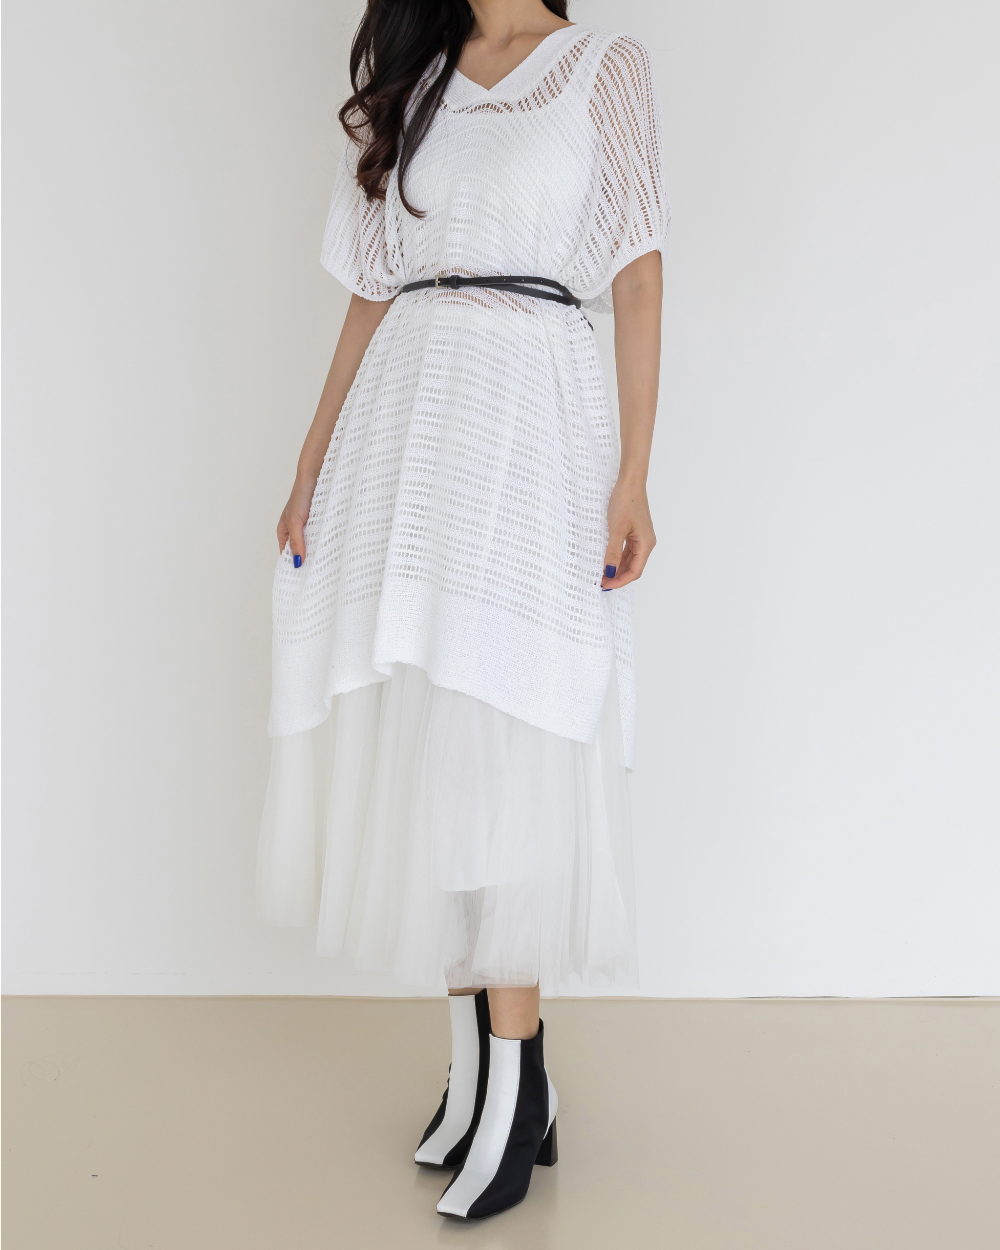 mini skirt model image-S1L7